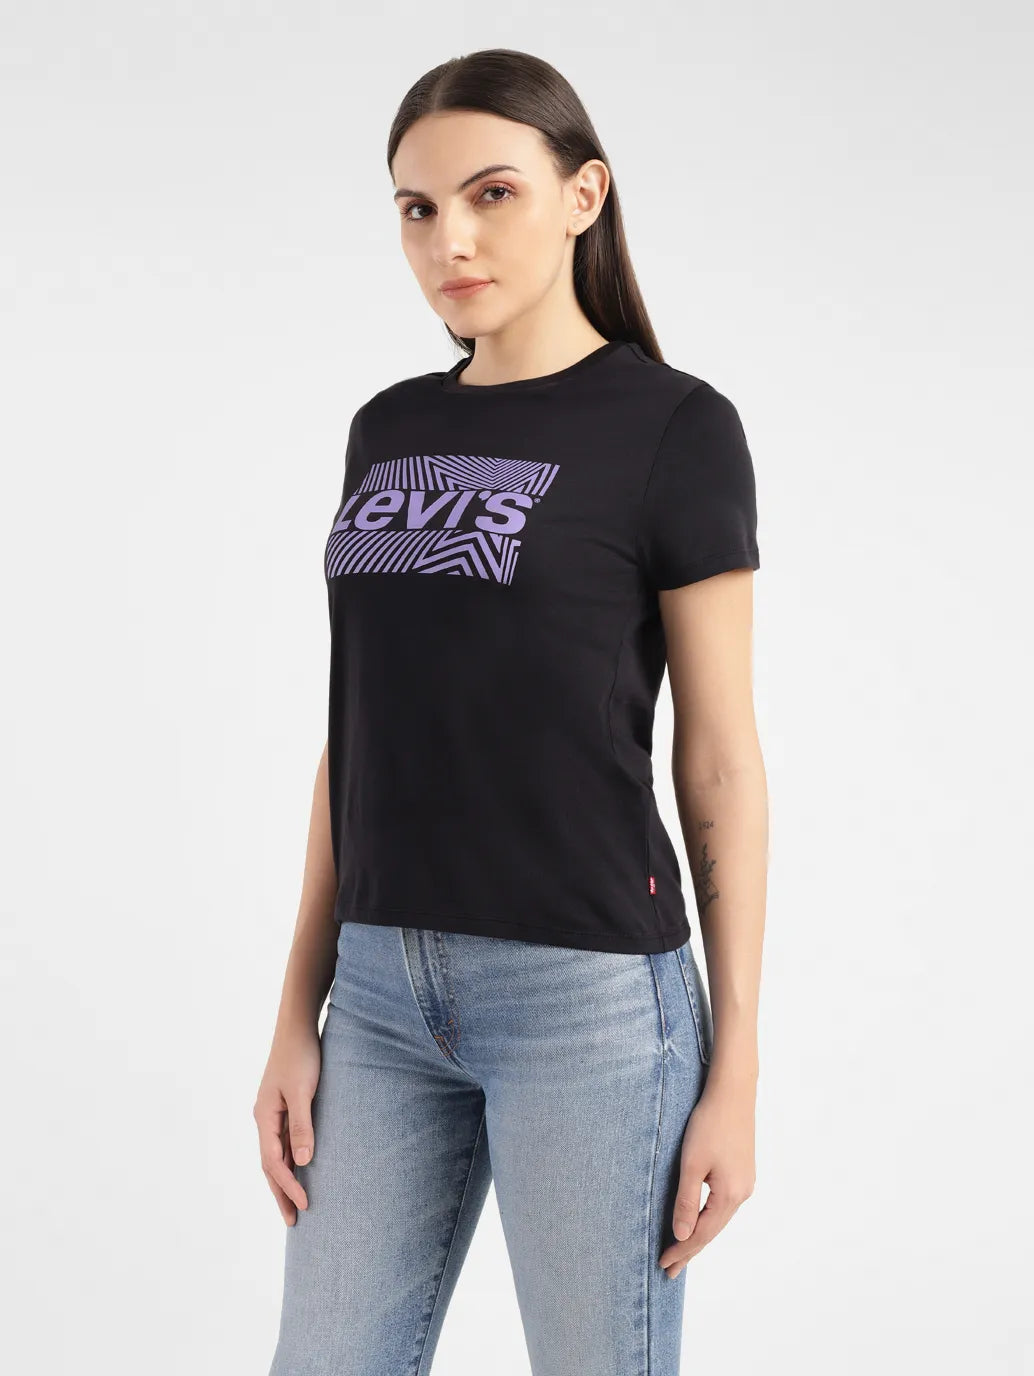 Women's Brand Logo Crew Neck T-shirts